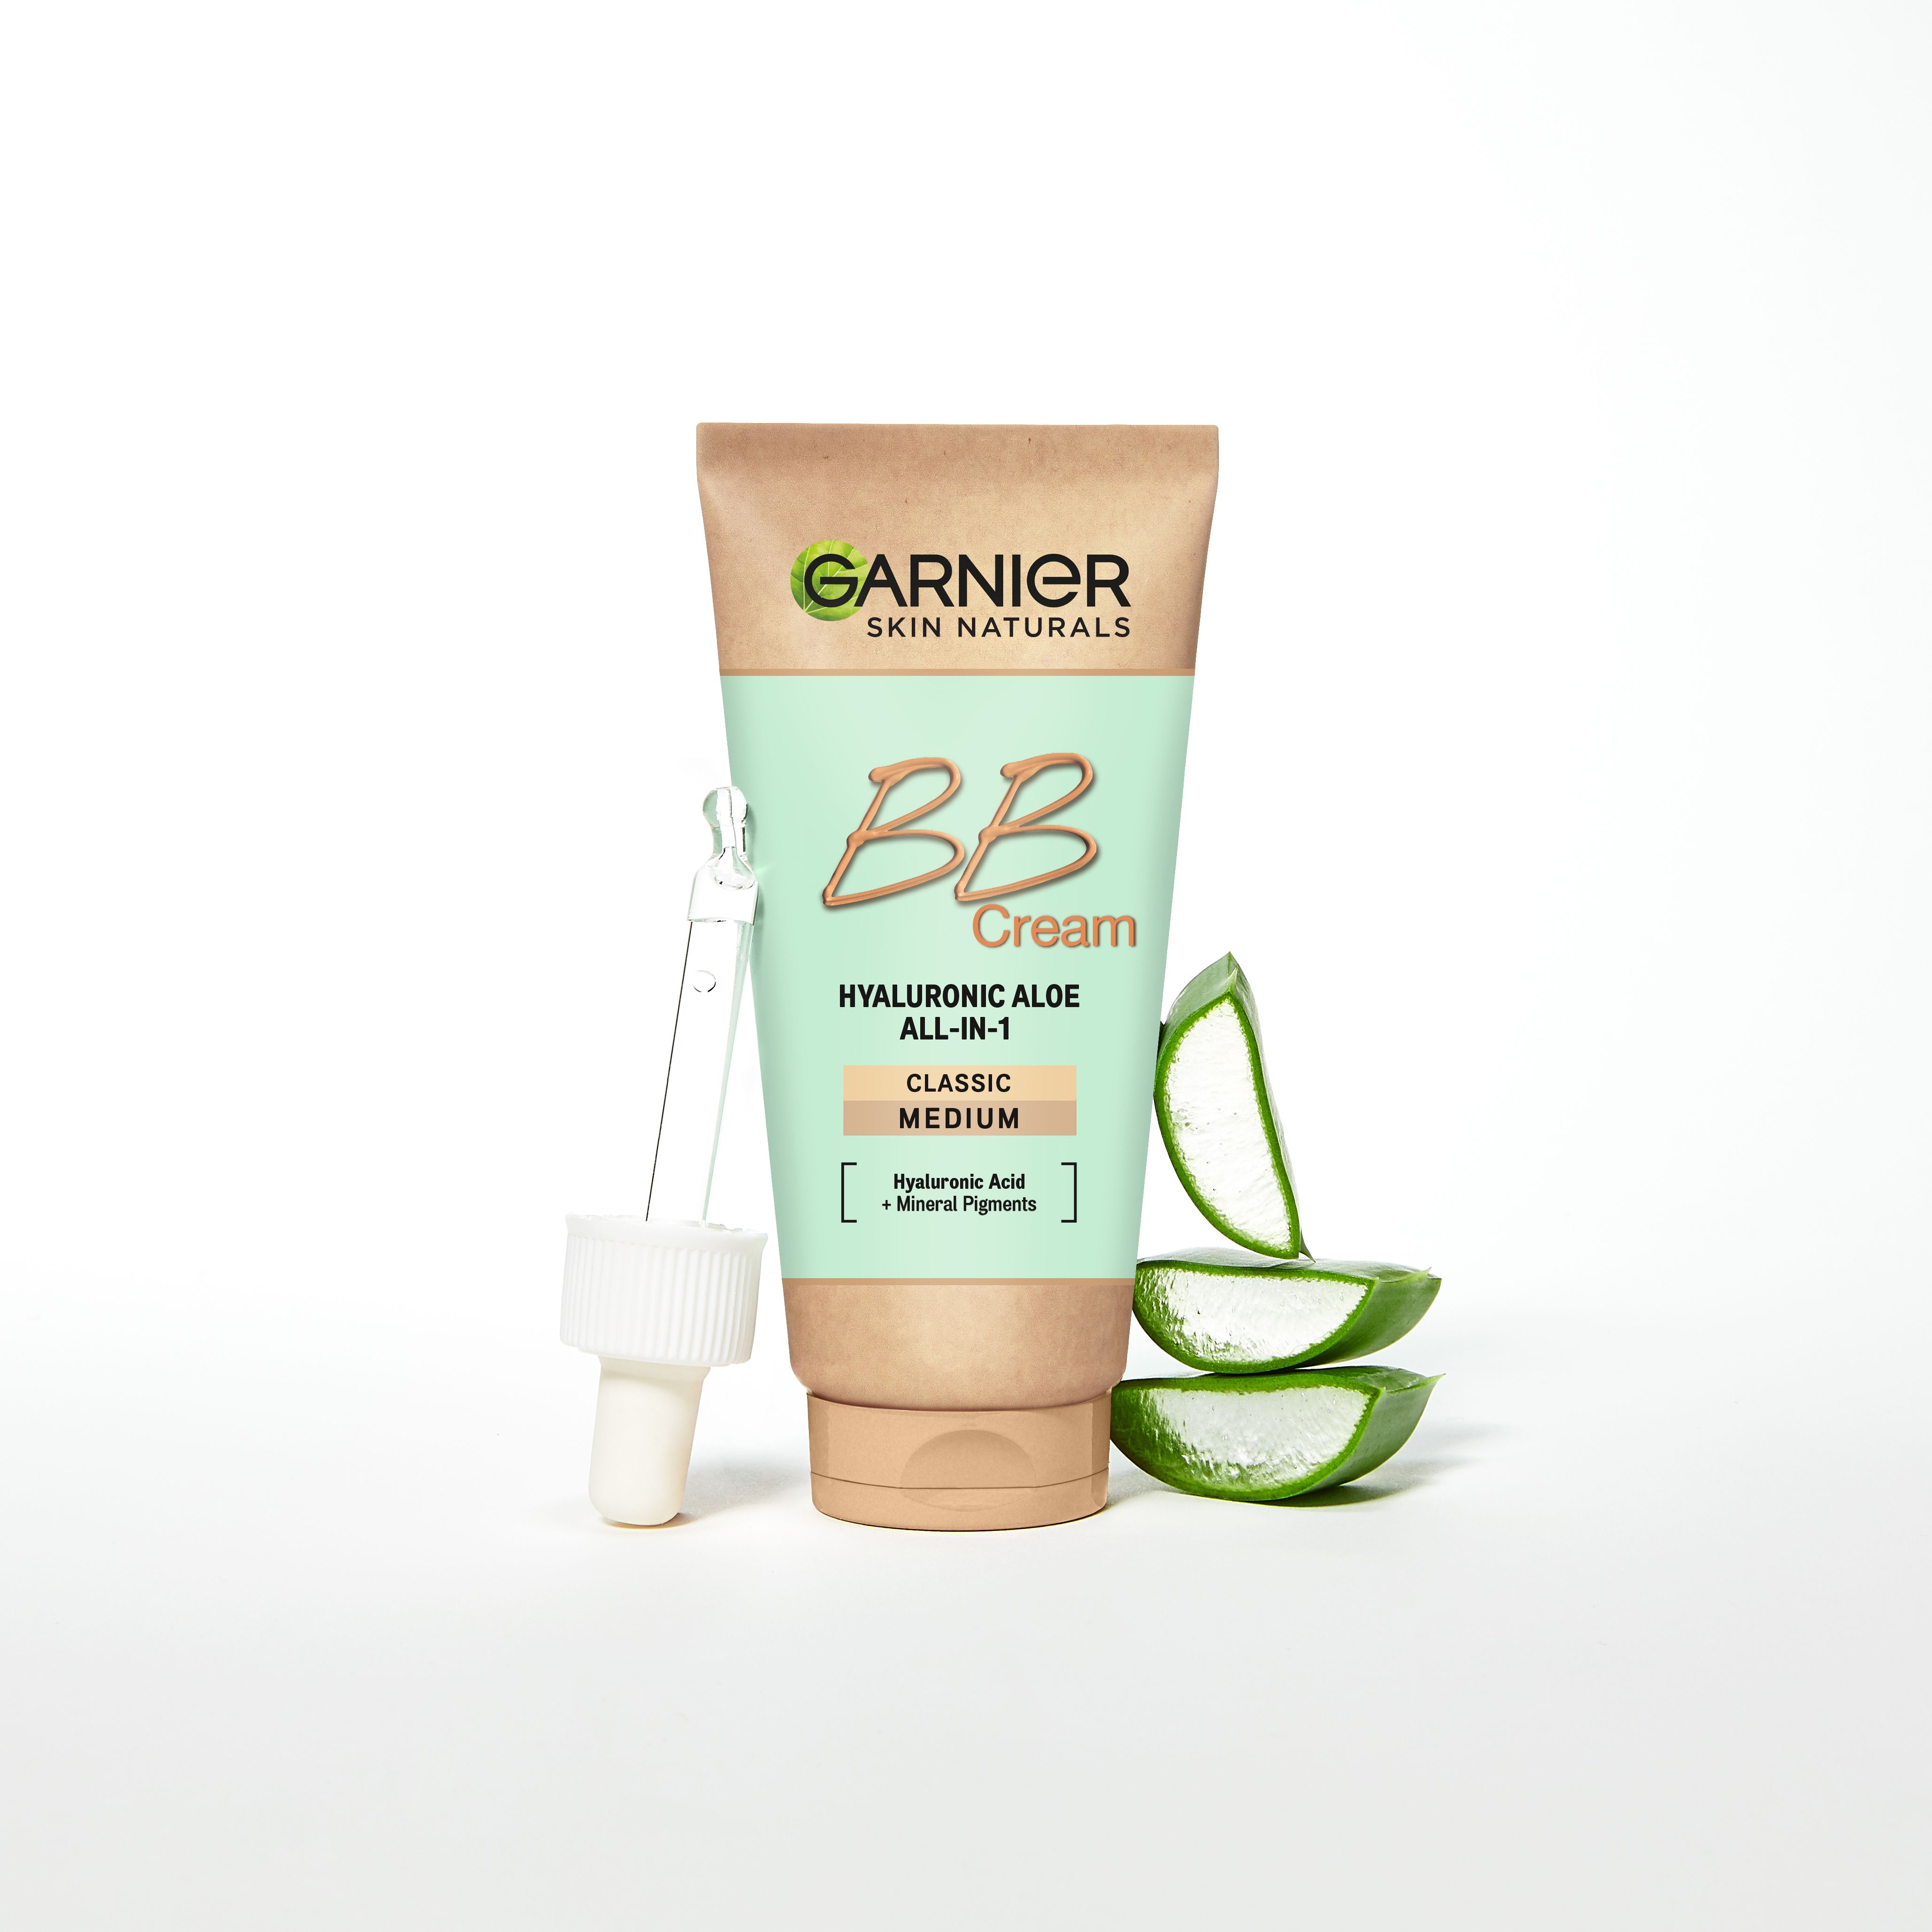 BB-крем Garnier Skin Naturals Секрет Совершенства SPF 15, Натурально-бежевый, 50 мл (C4019101) - фото 3